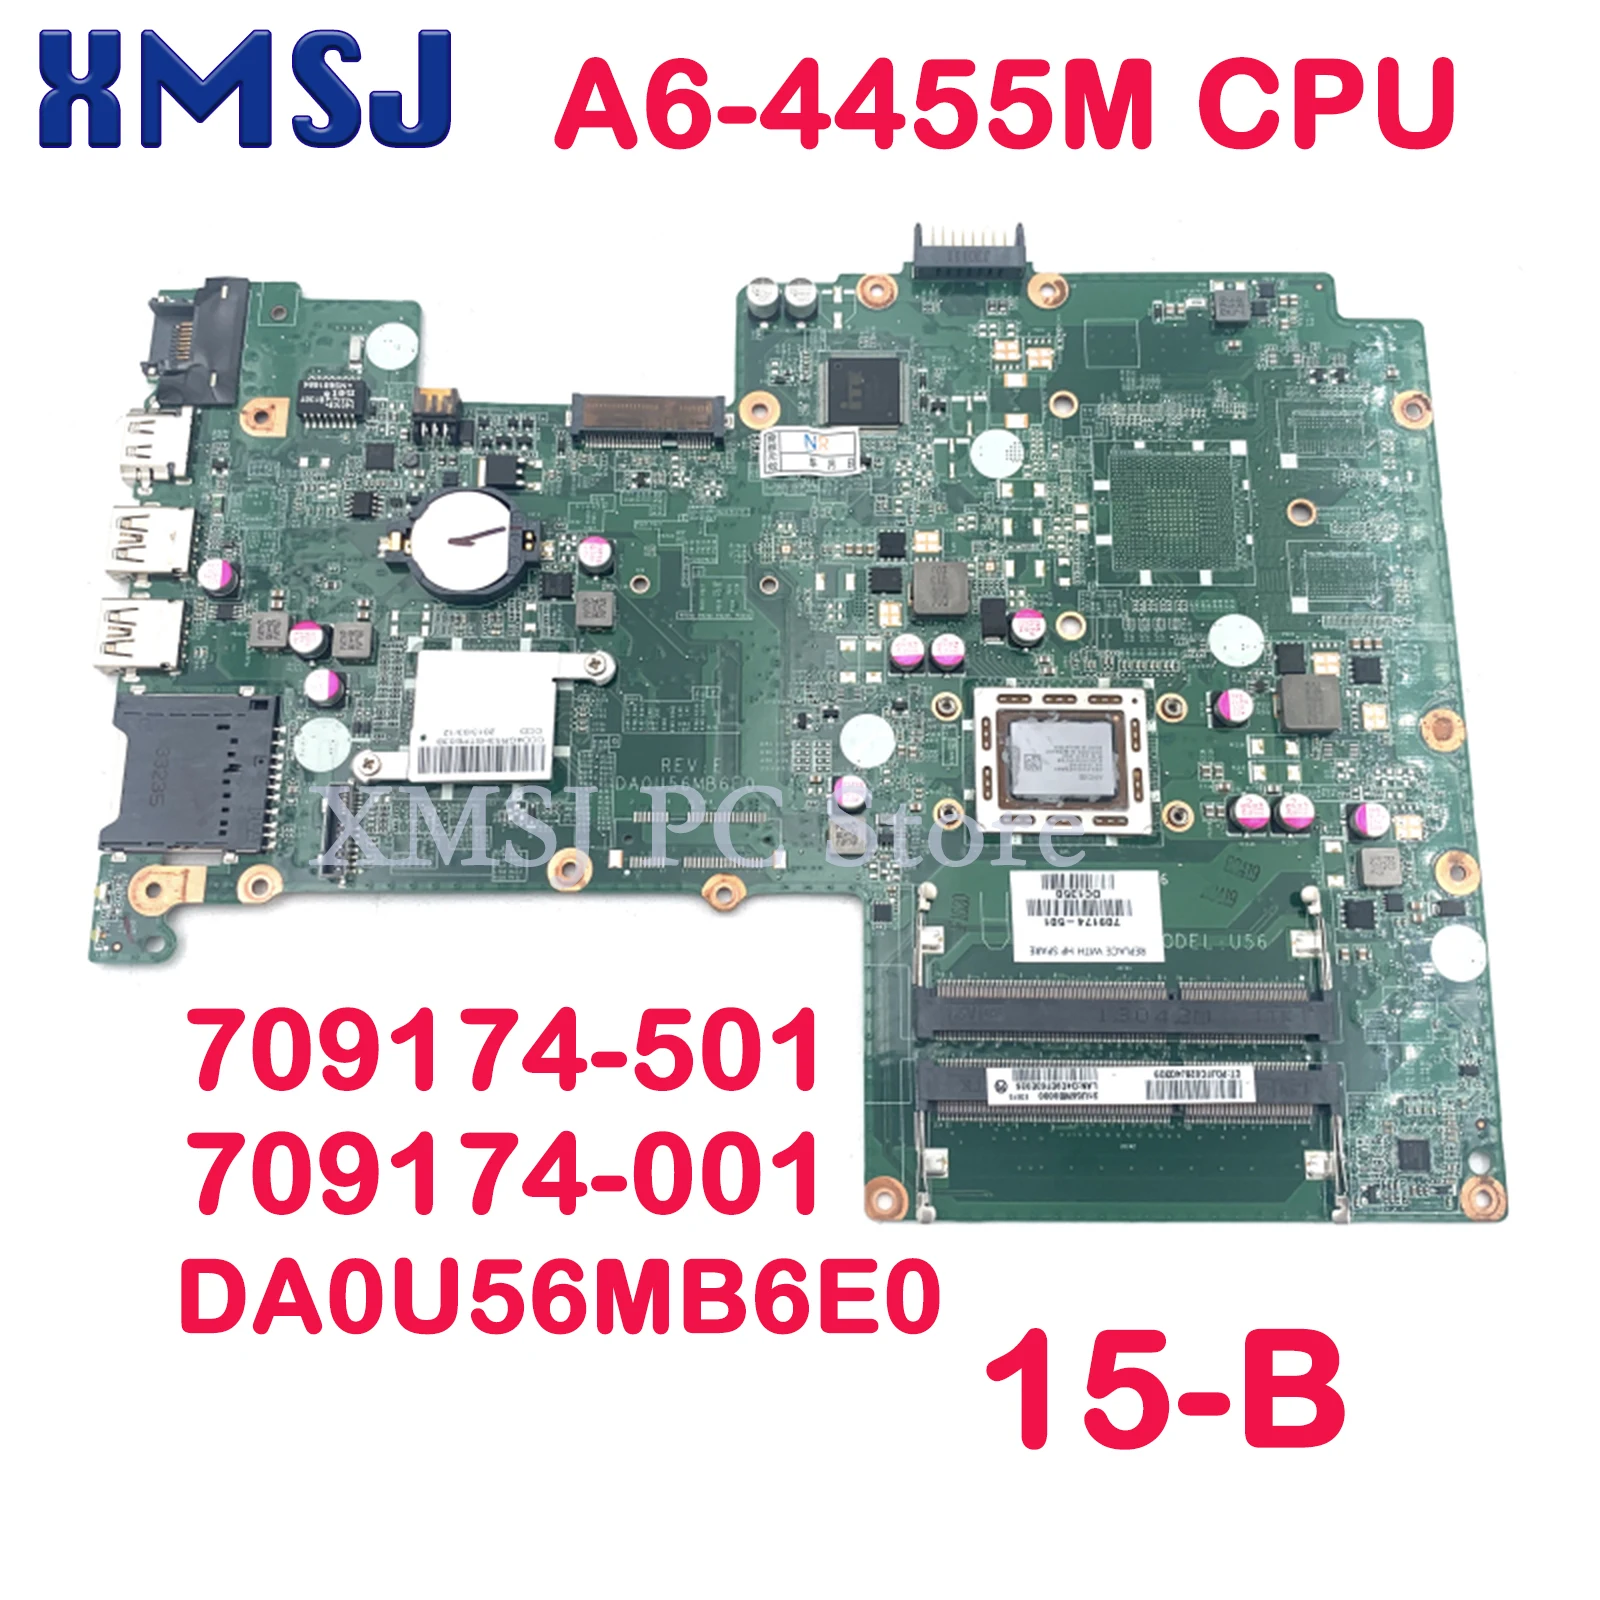 

XMSJ 709174-501 709174-001 DA0U56MB6E0 For HP Pavilion 15-B Laptop Motherboard With A6-4455M CPU Onboard Main Board